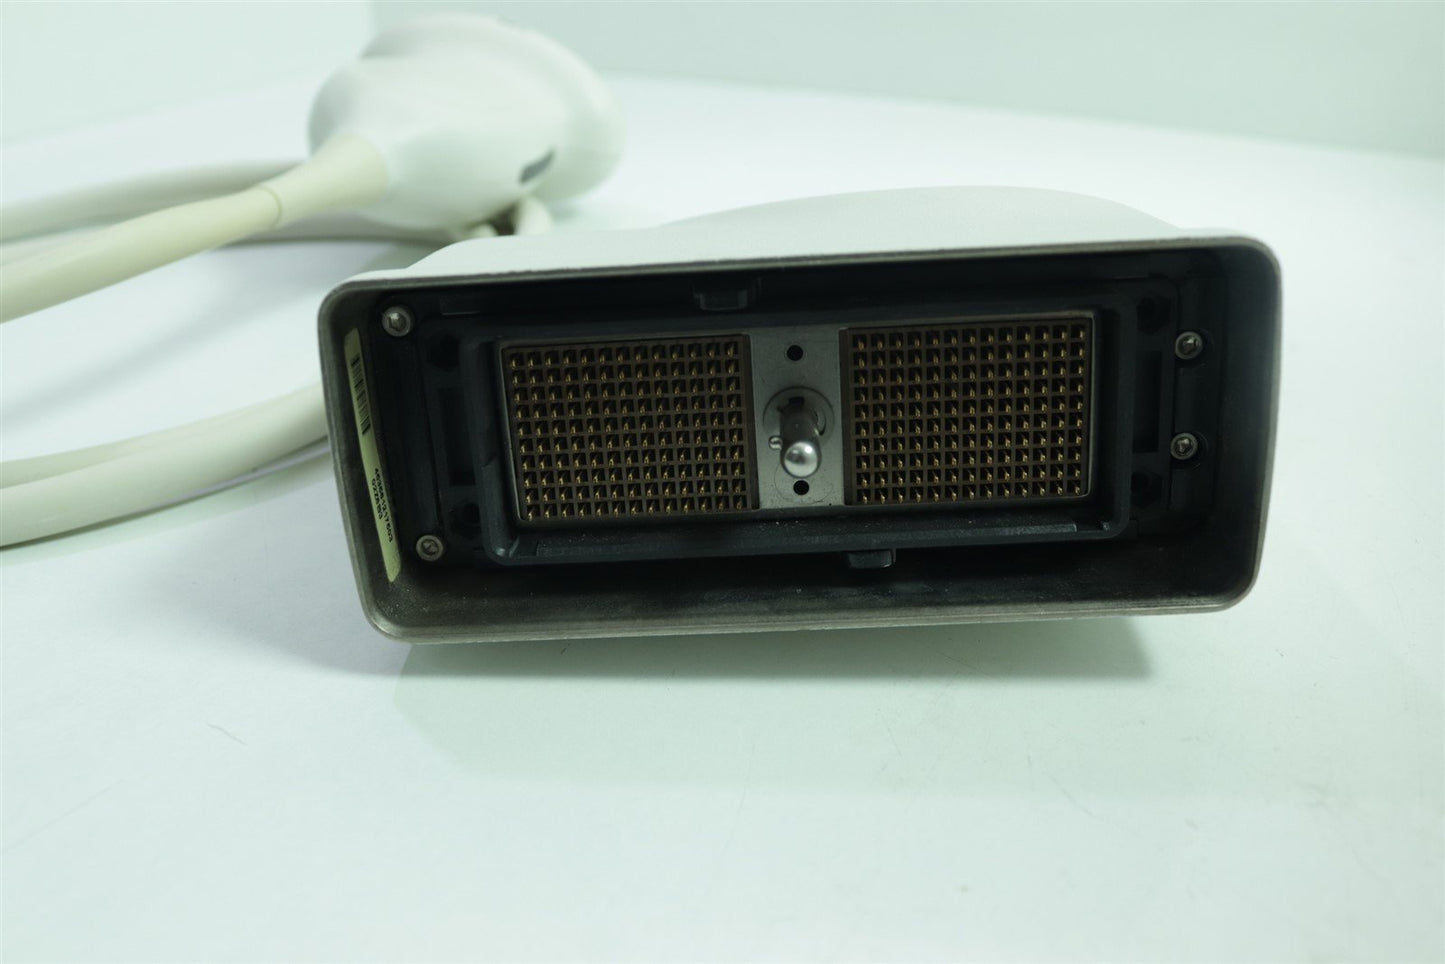 Phillips Ultrasound Transducer Probe V6-2 453561217503